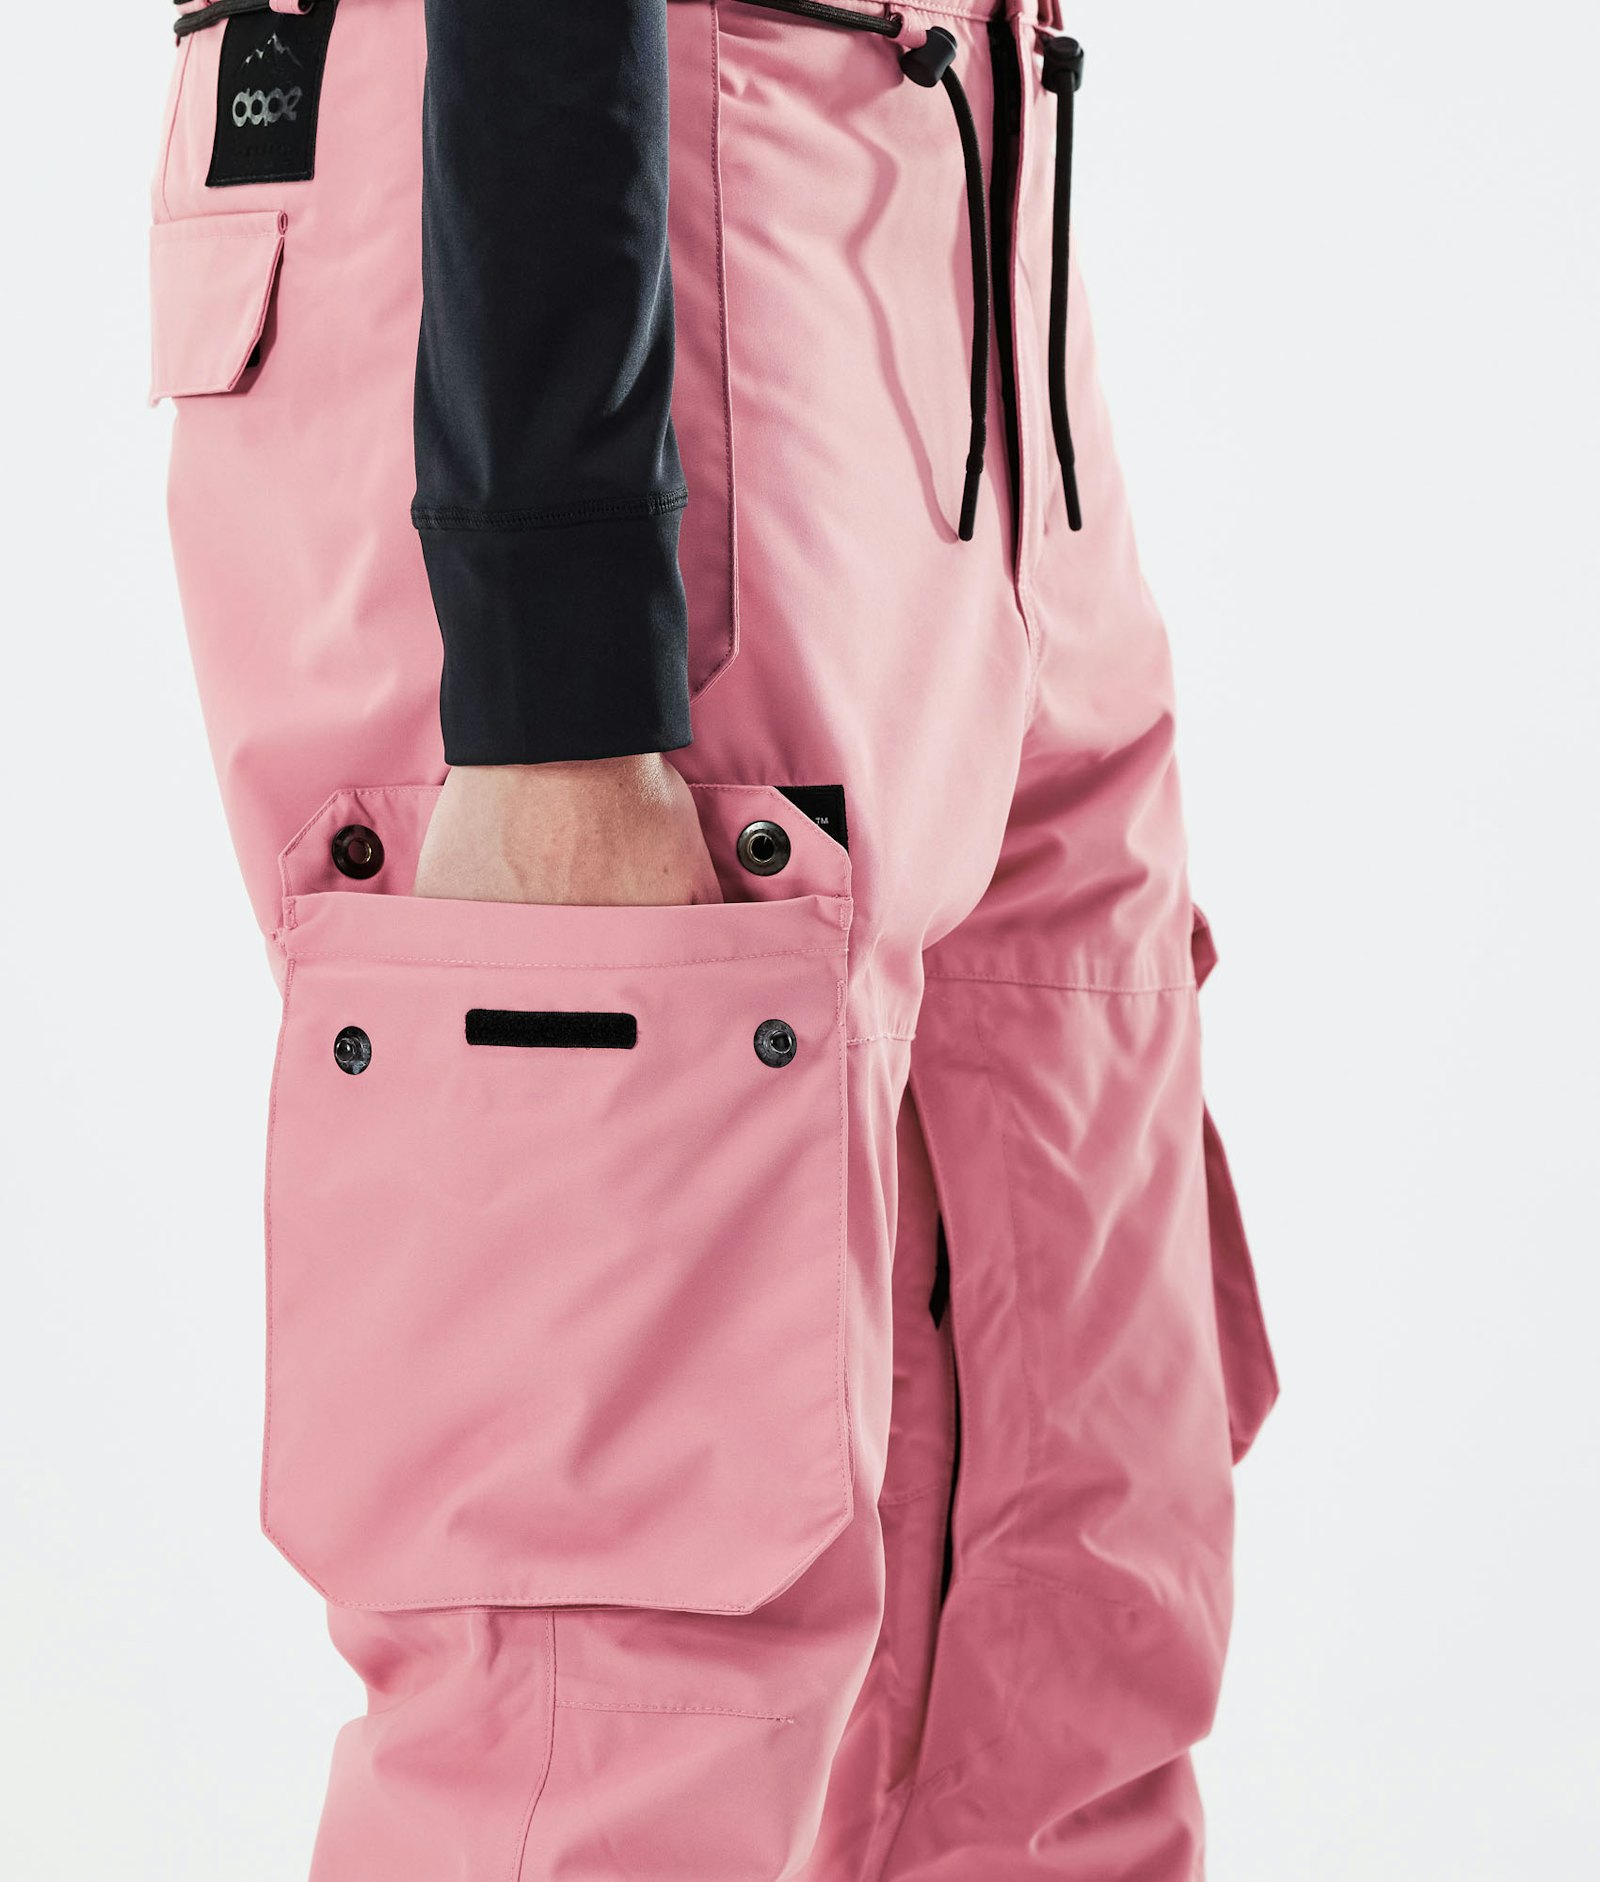 Iconic W 2021 Snowboardhose Damen Pink